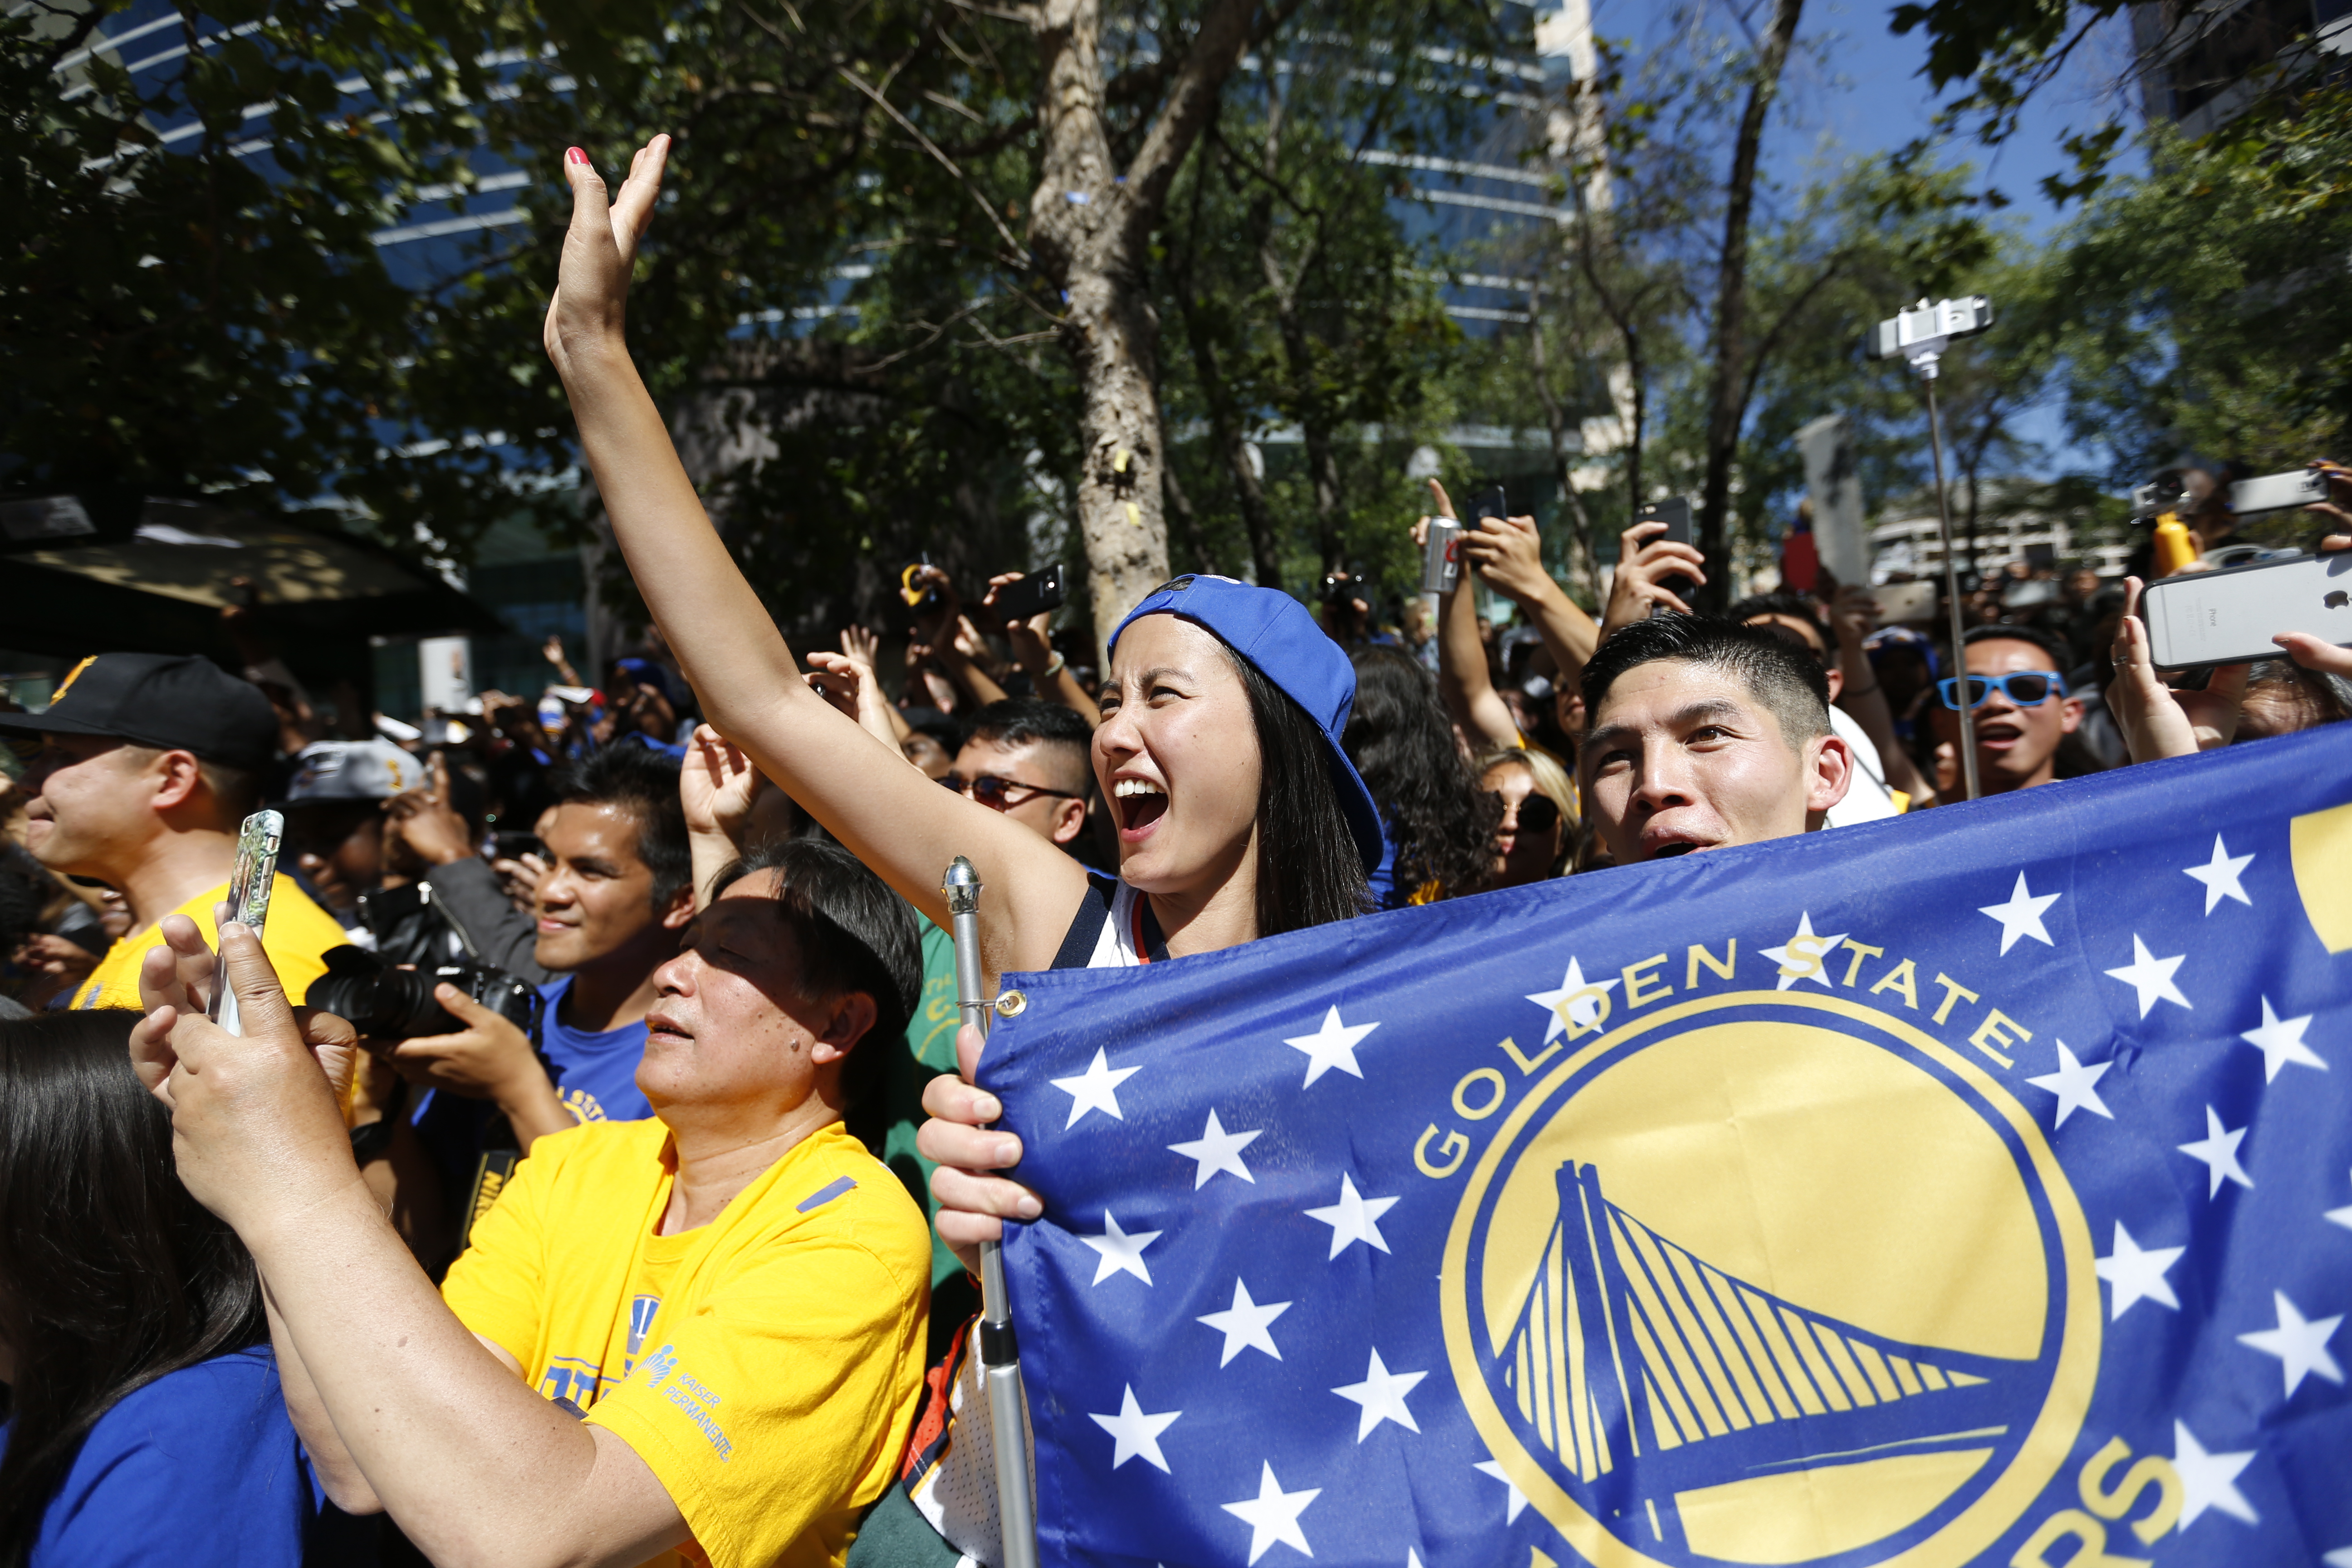 Golden State Warriors parade set for Thursday in Oakland